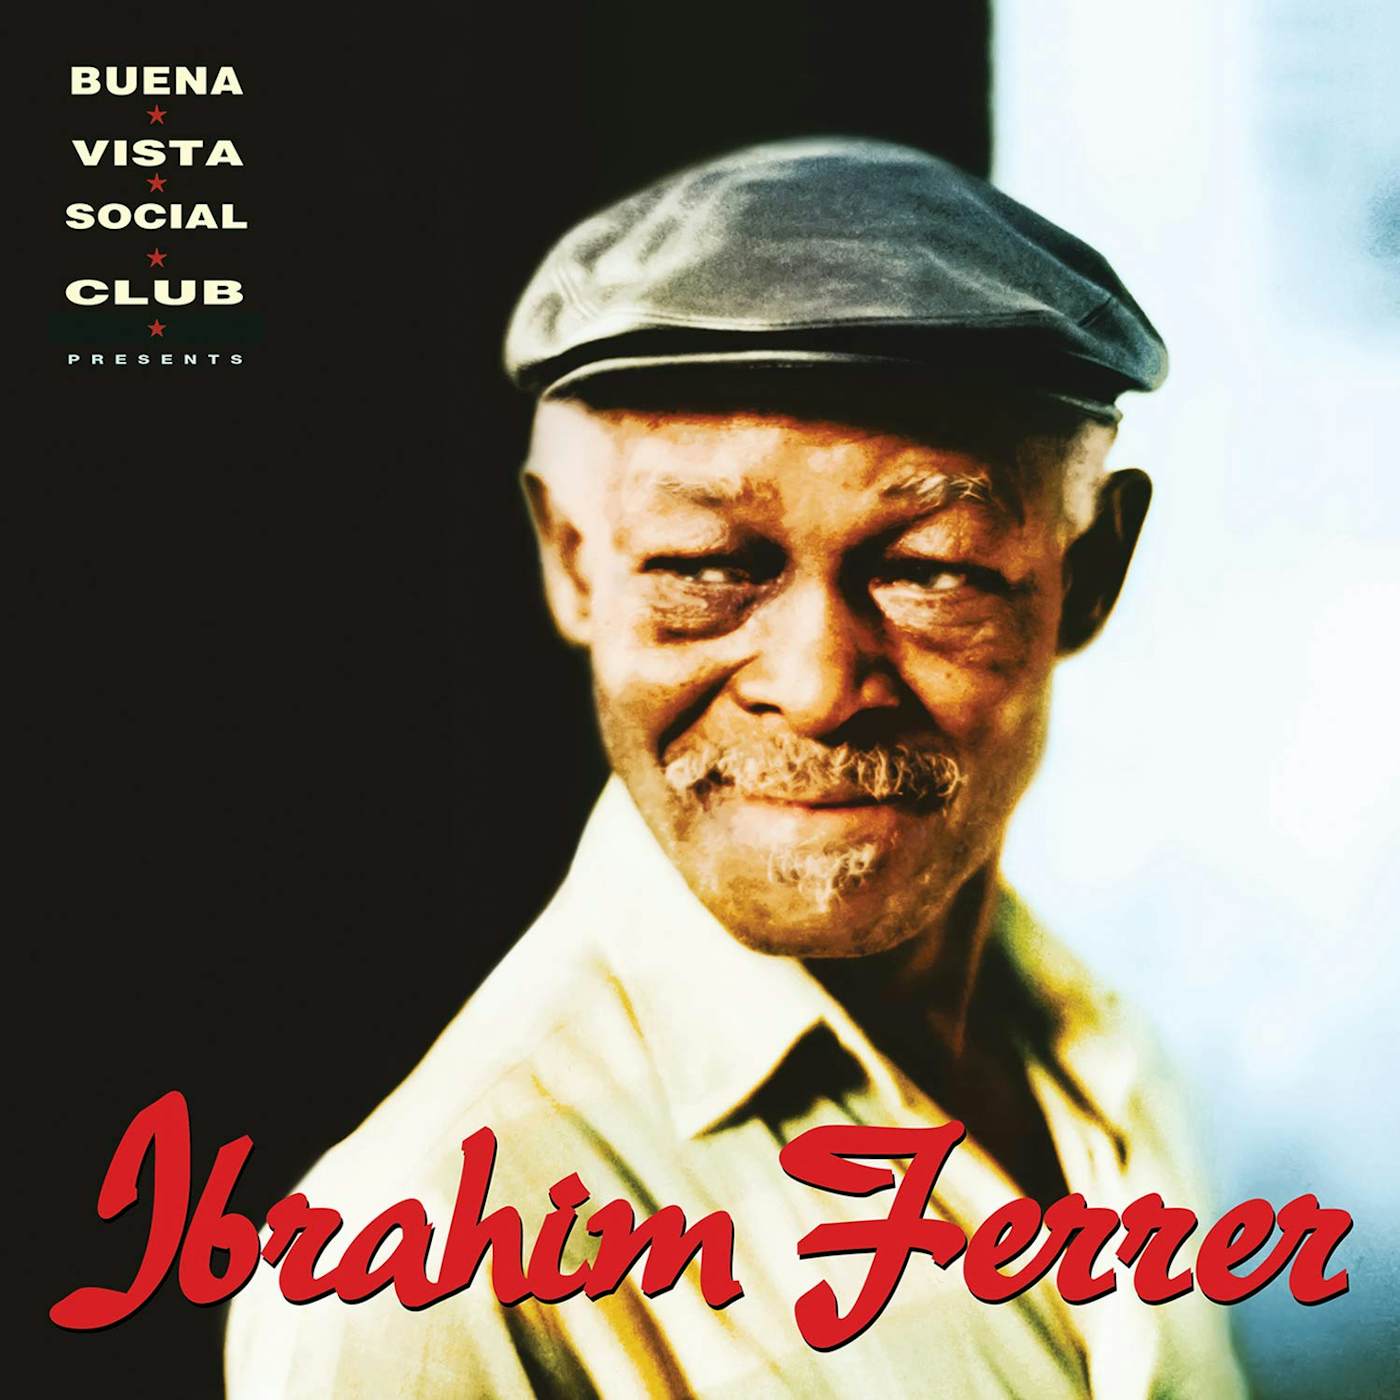 Ibrahim Ferrer Vinyl Record